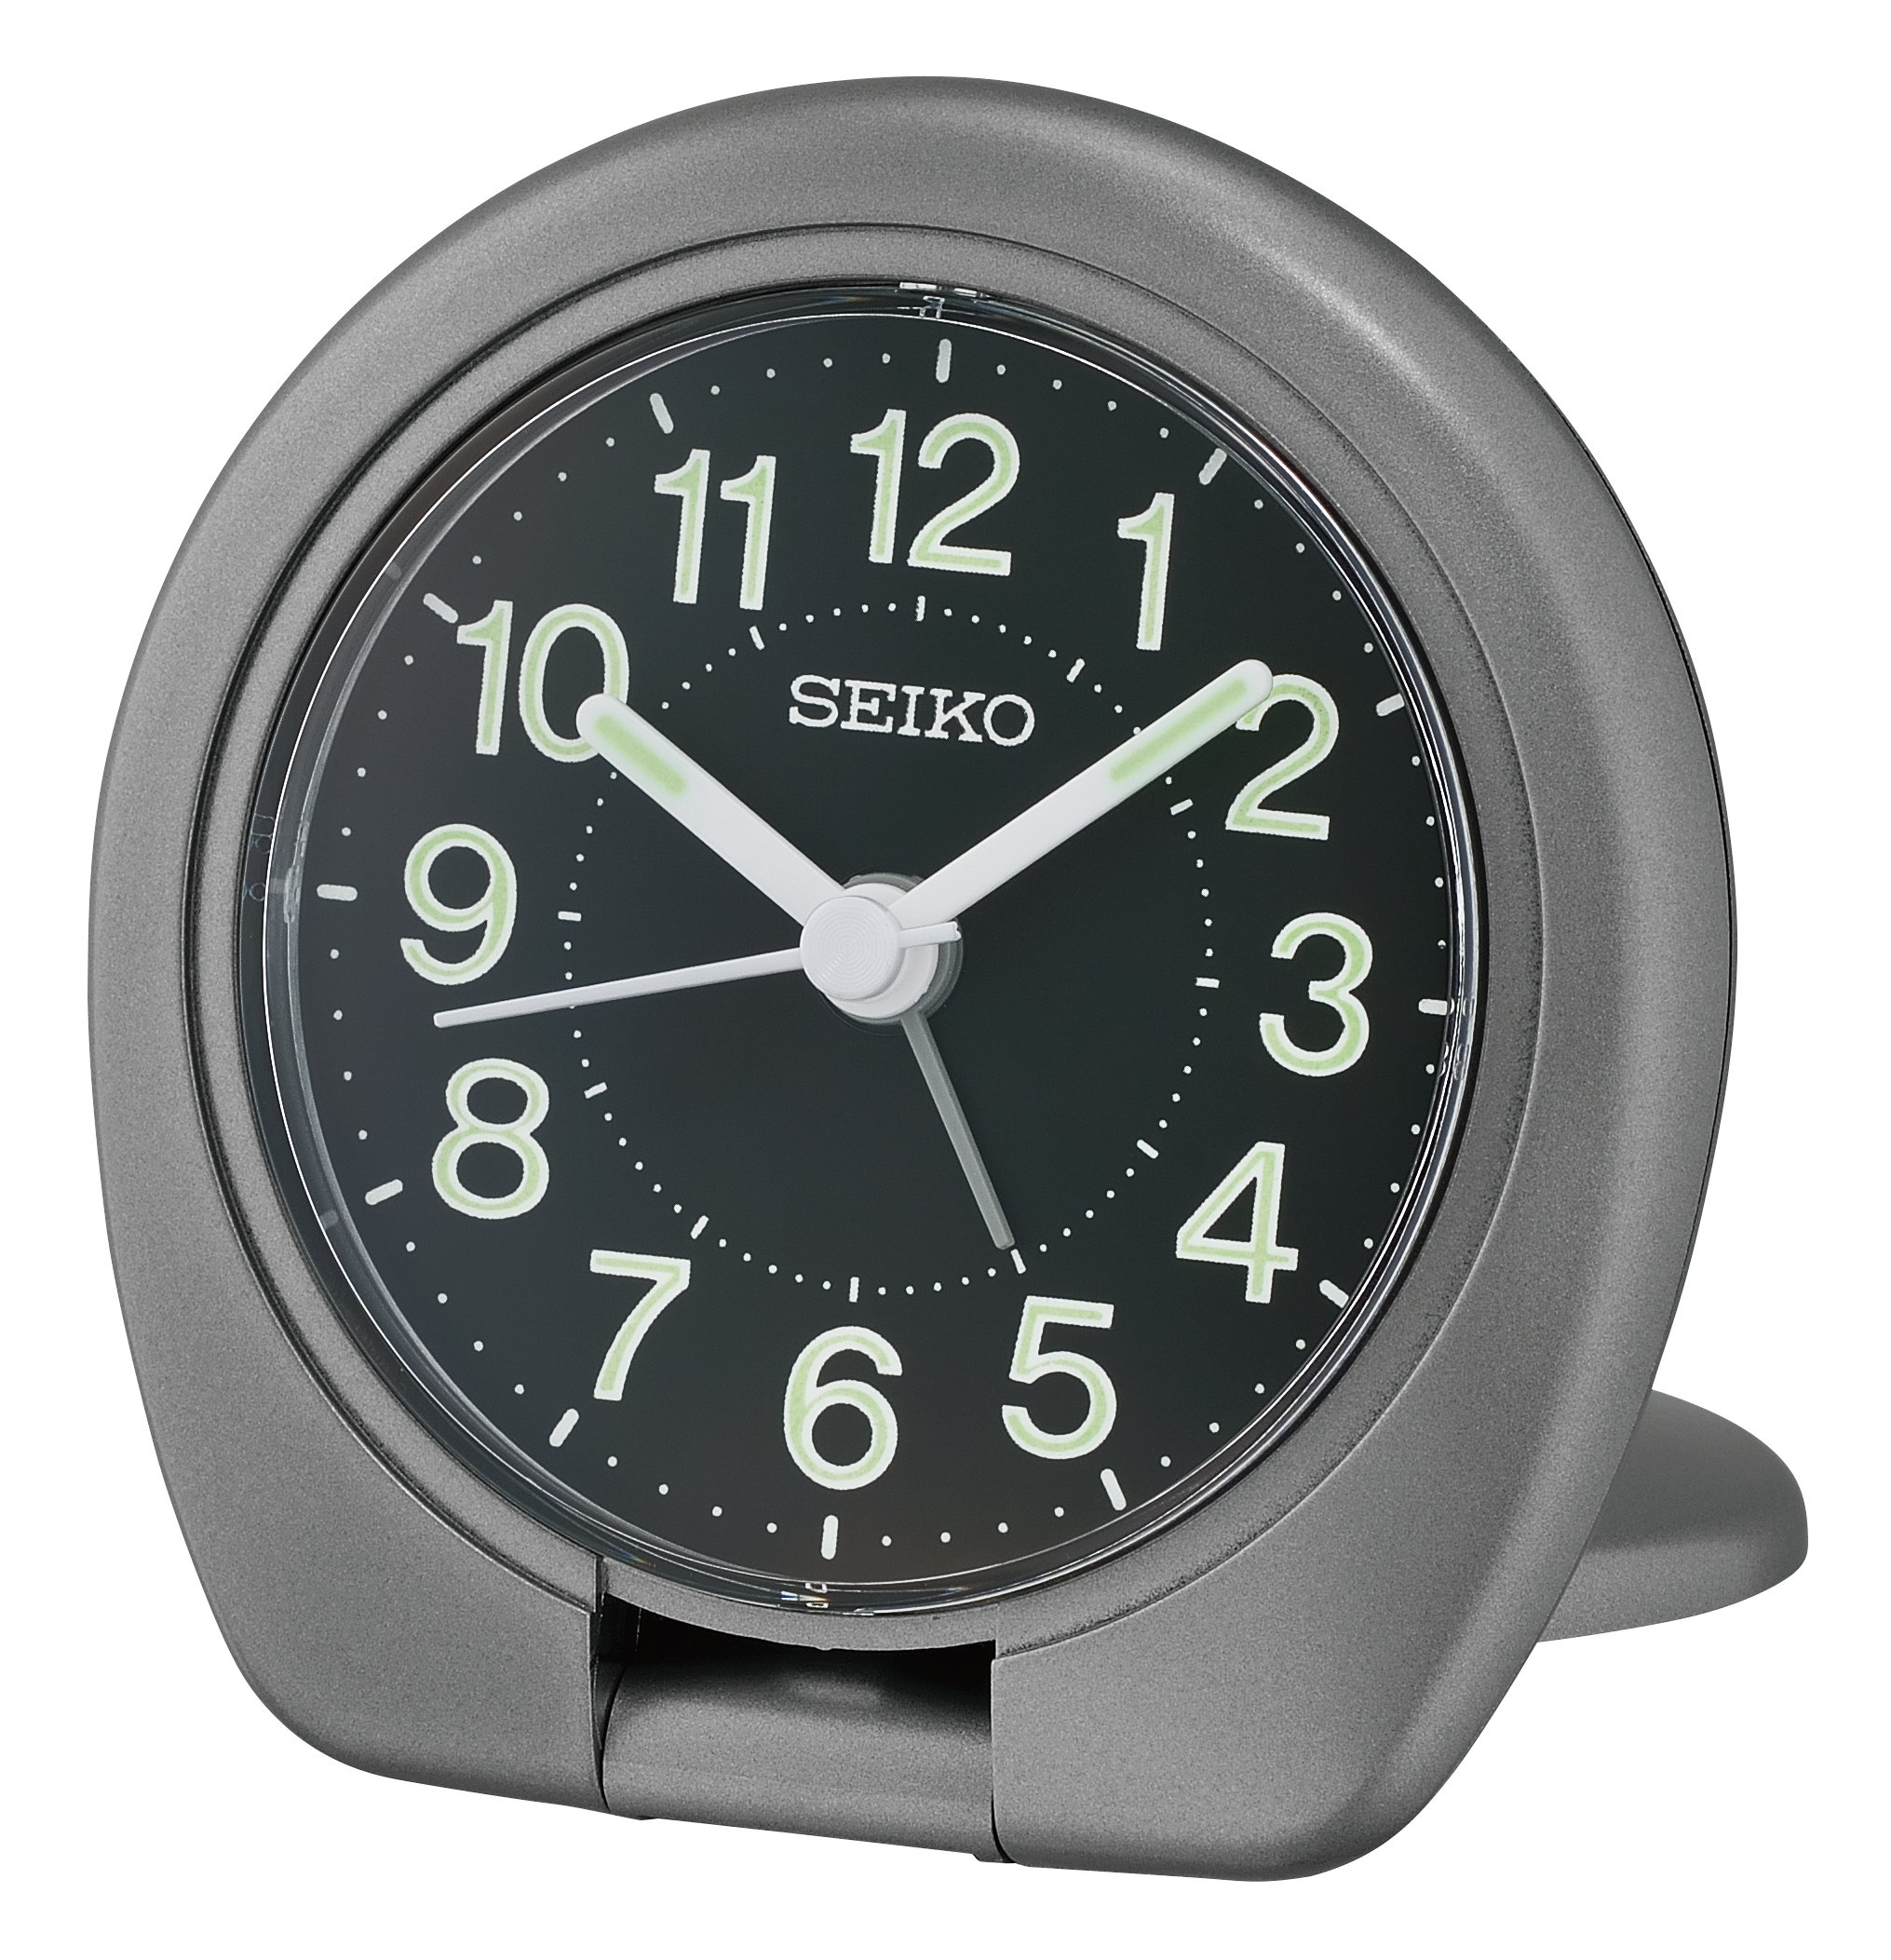 Seiko Analog Quartz Alarm Tabletop Clock | Wayfair